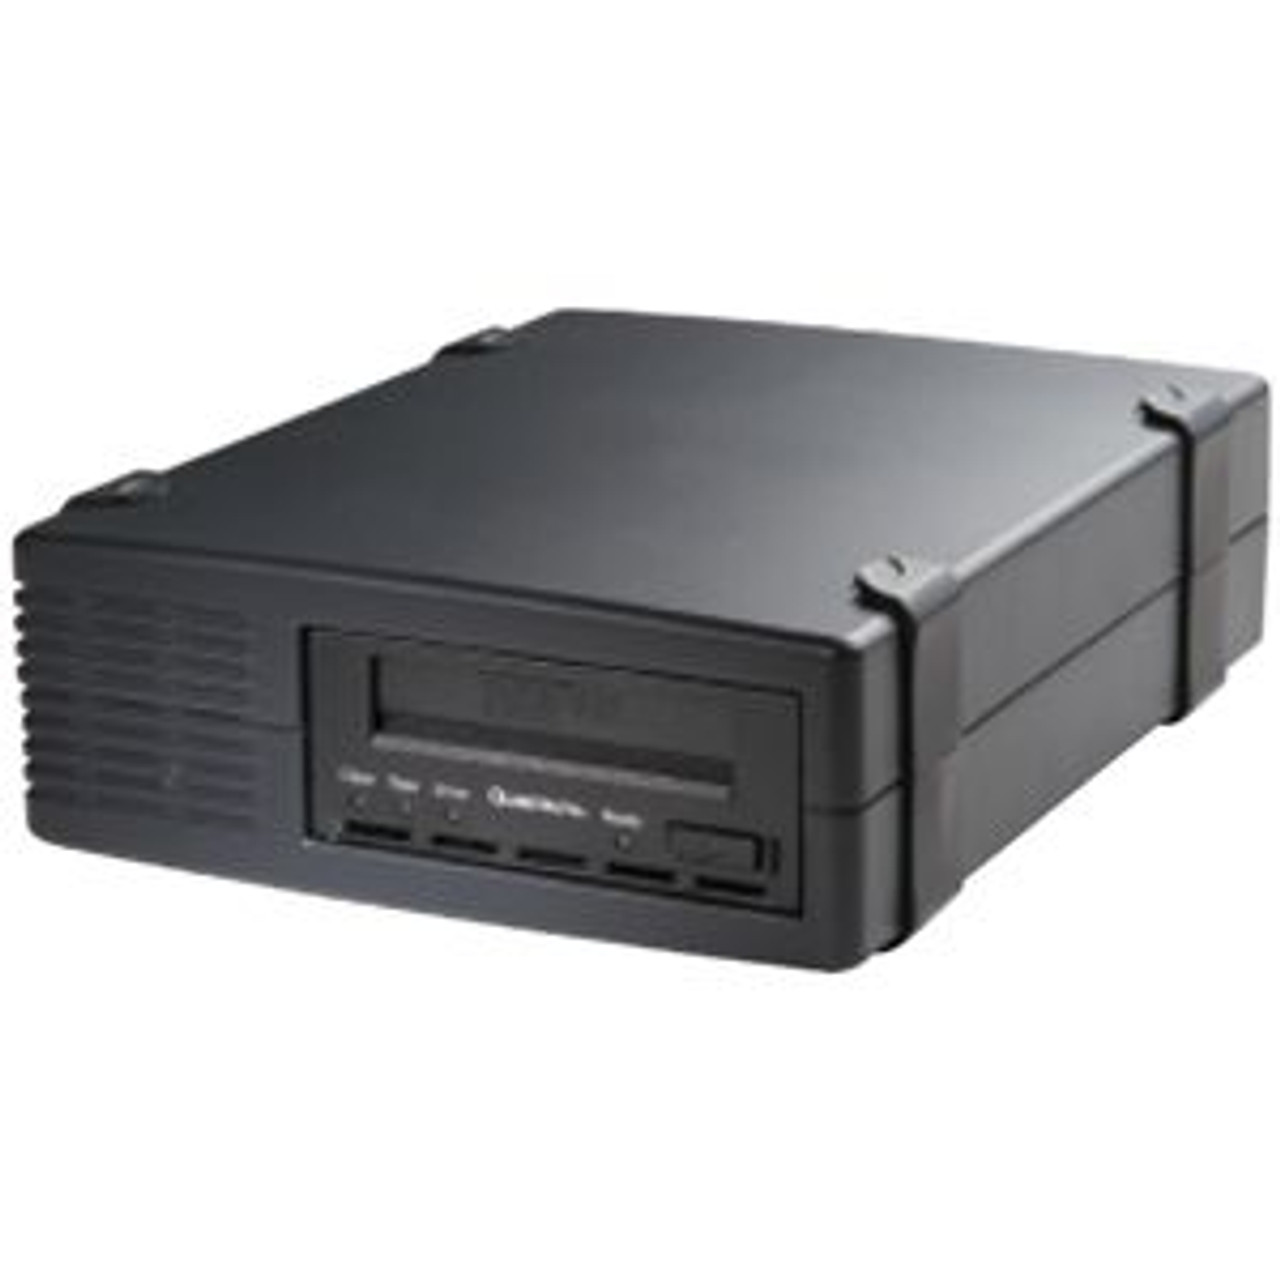 CD160LWH-SST - Quantum CD160LWH-SST DAT 160 Tape Drive - 80GB (Native)/160GB (Compressed) - 1/2H Internal